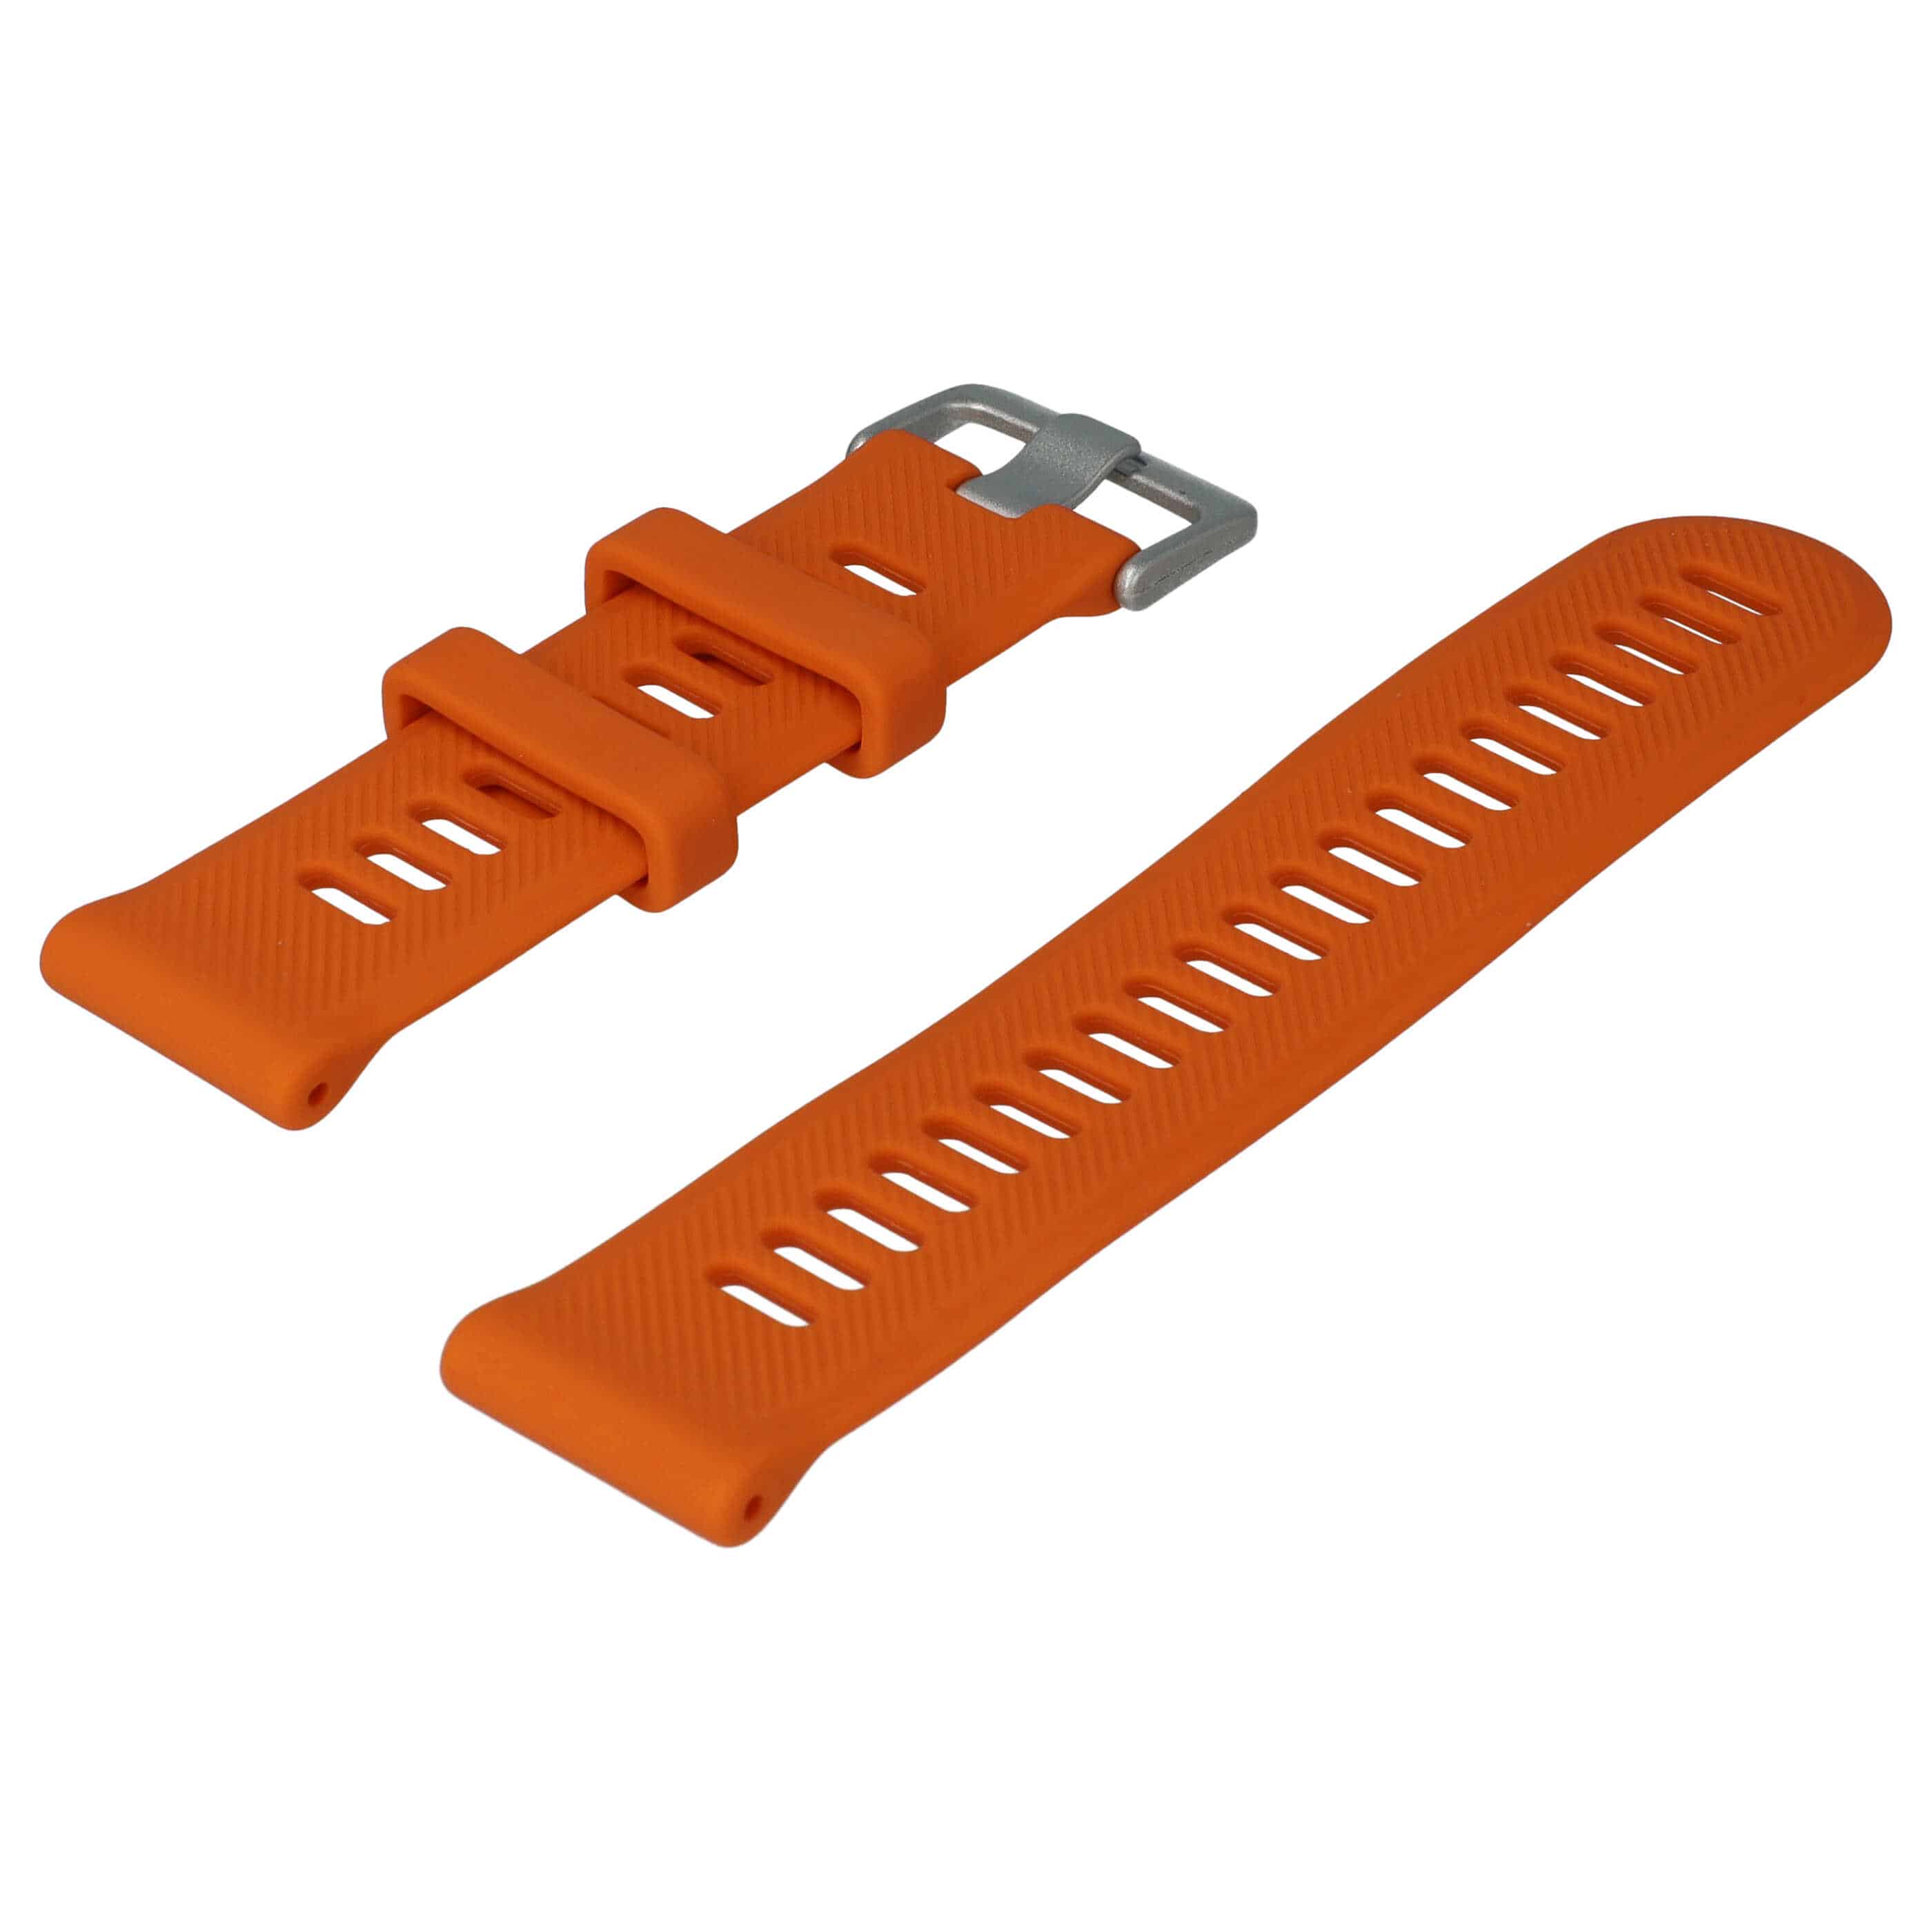 cinturino per Garmin Forerunner Smartwatch - 9 + 12,2 cm lunghezza, 22mm ampiezza, silicone, arancione